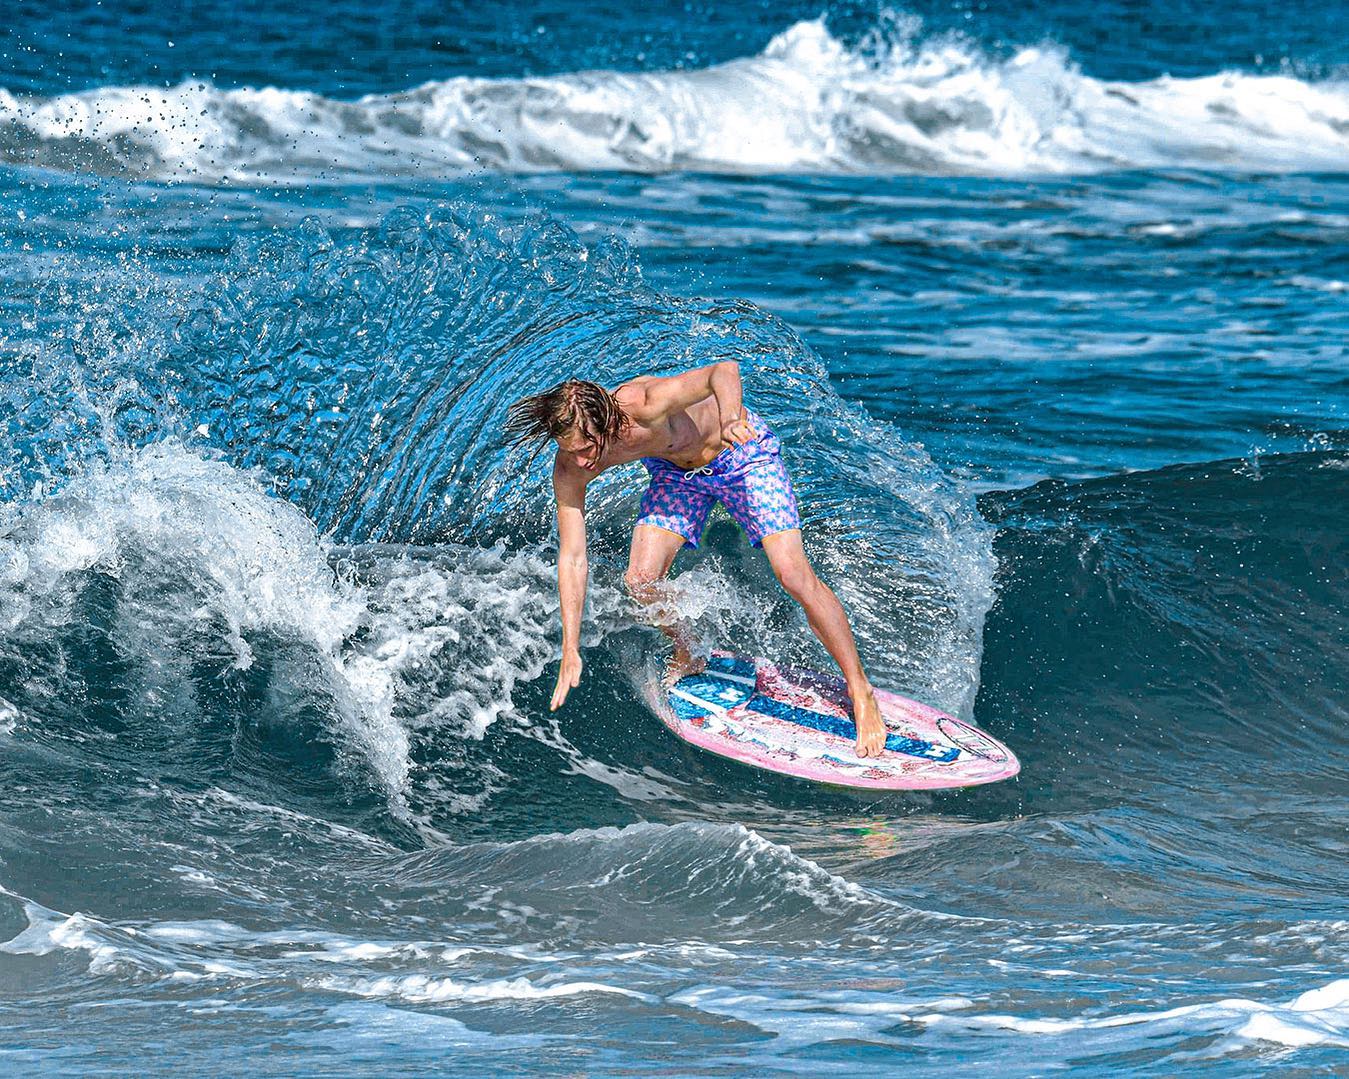 Bermies - Eco friendly premium swimwear - Surfer Dude